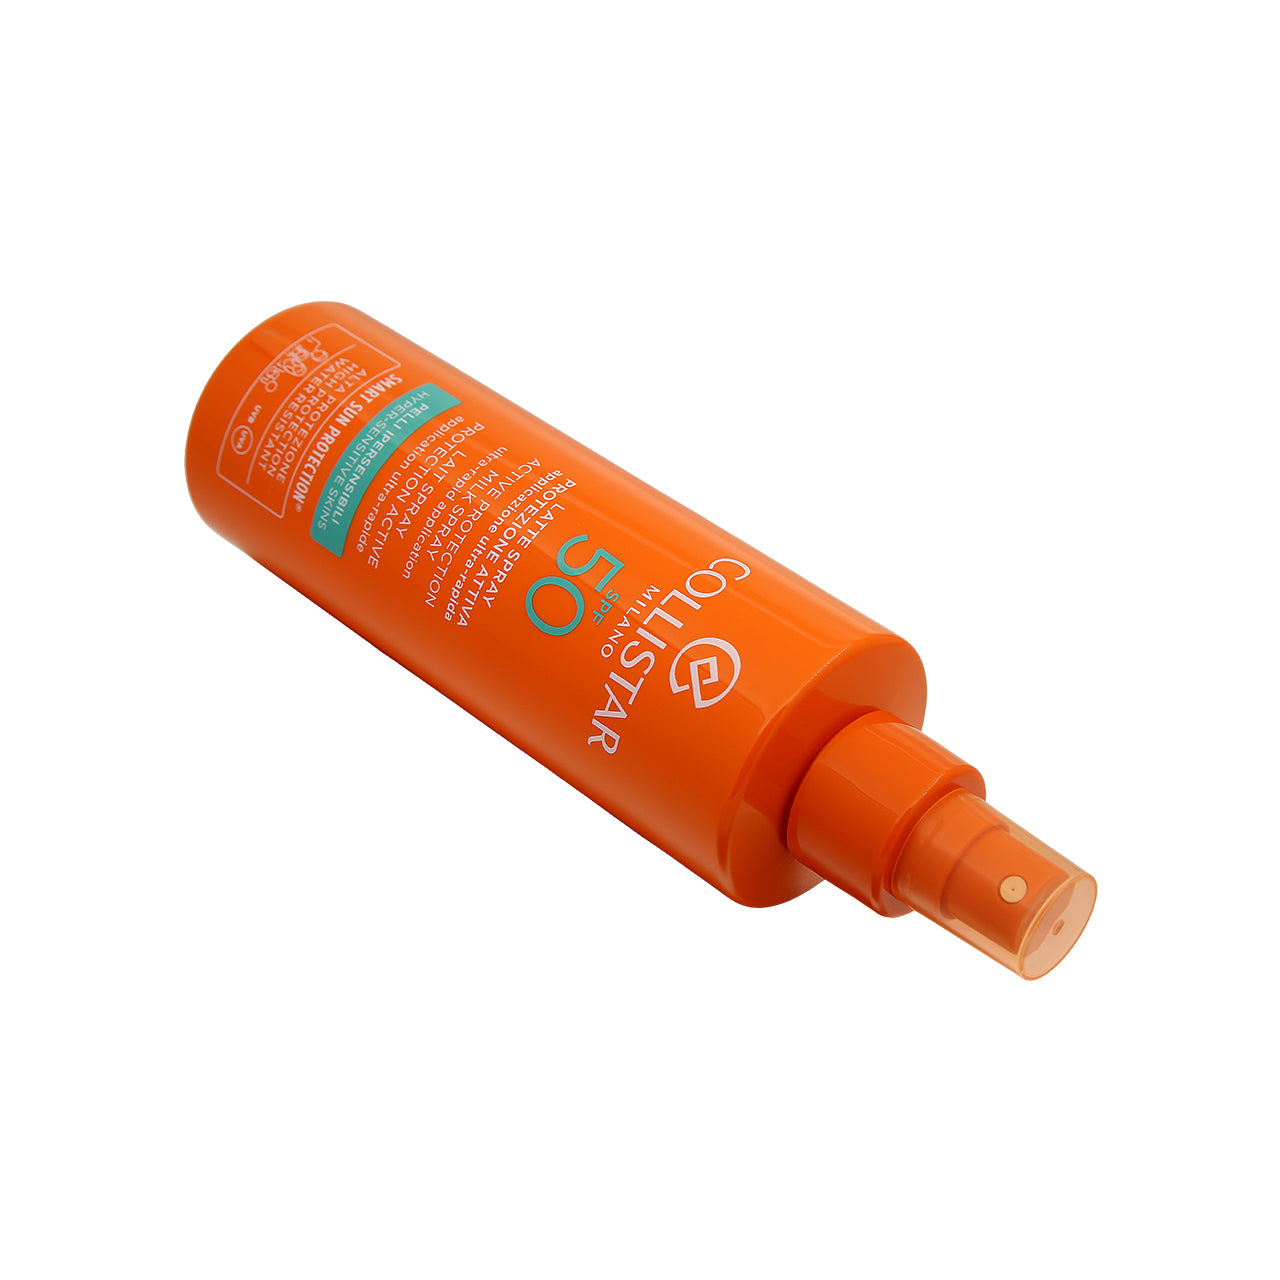 Collistar Active Protection Milk Spray Hyper-Sensitive Skins SPF50 200ml | Sasa Global eShop